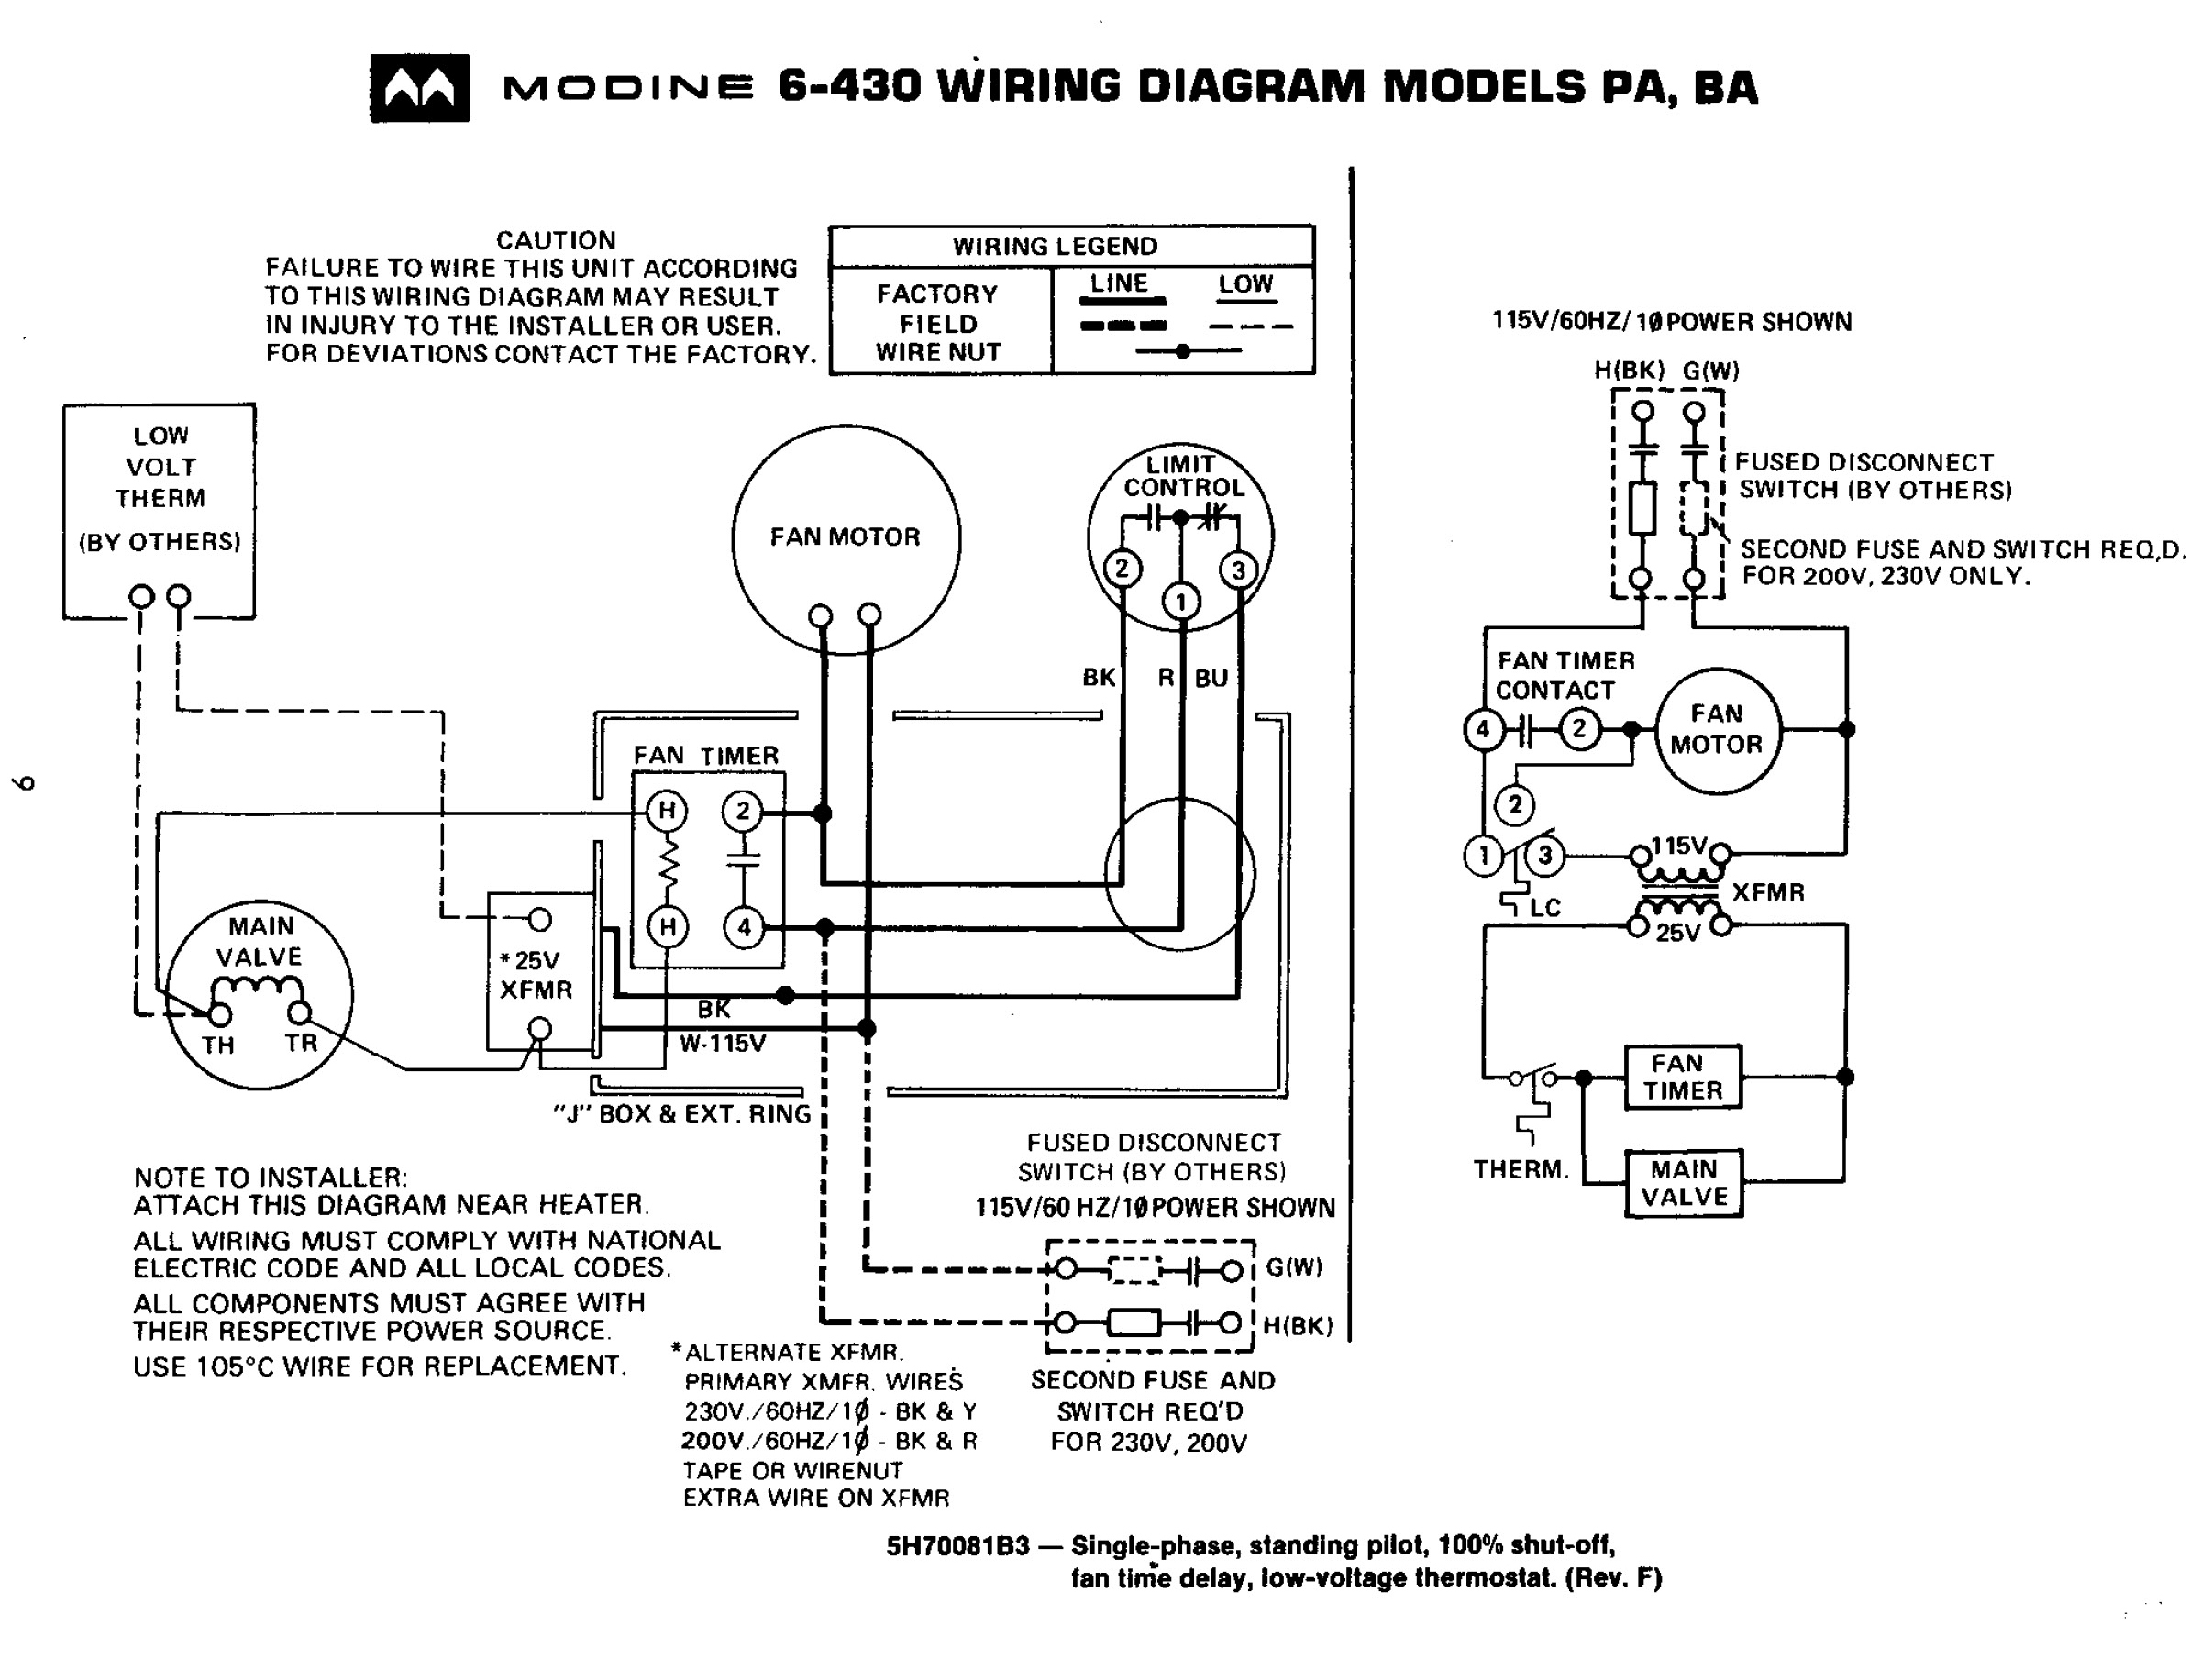 Modine Garage Heater Wiring Diagram | Manual E-Books - Modine Gas Heater Wiring Diagram